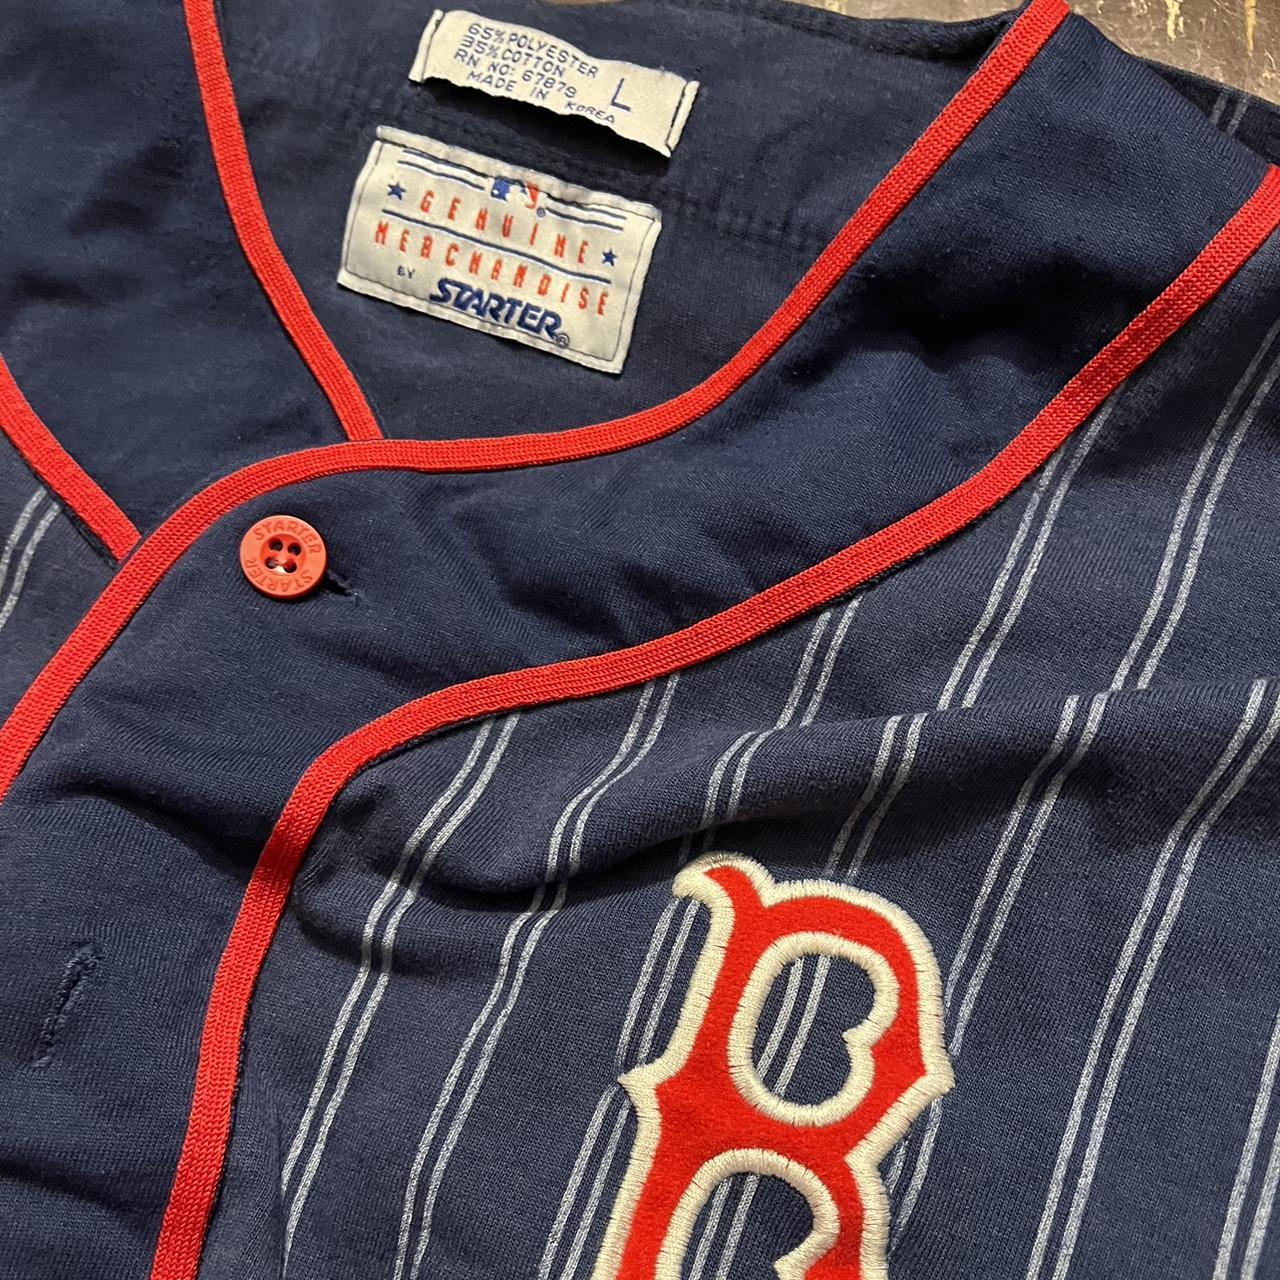 Genuine Merchandise, Shirts, Vintage Pinstripe Red Sox Jersey